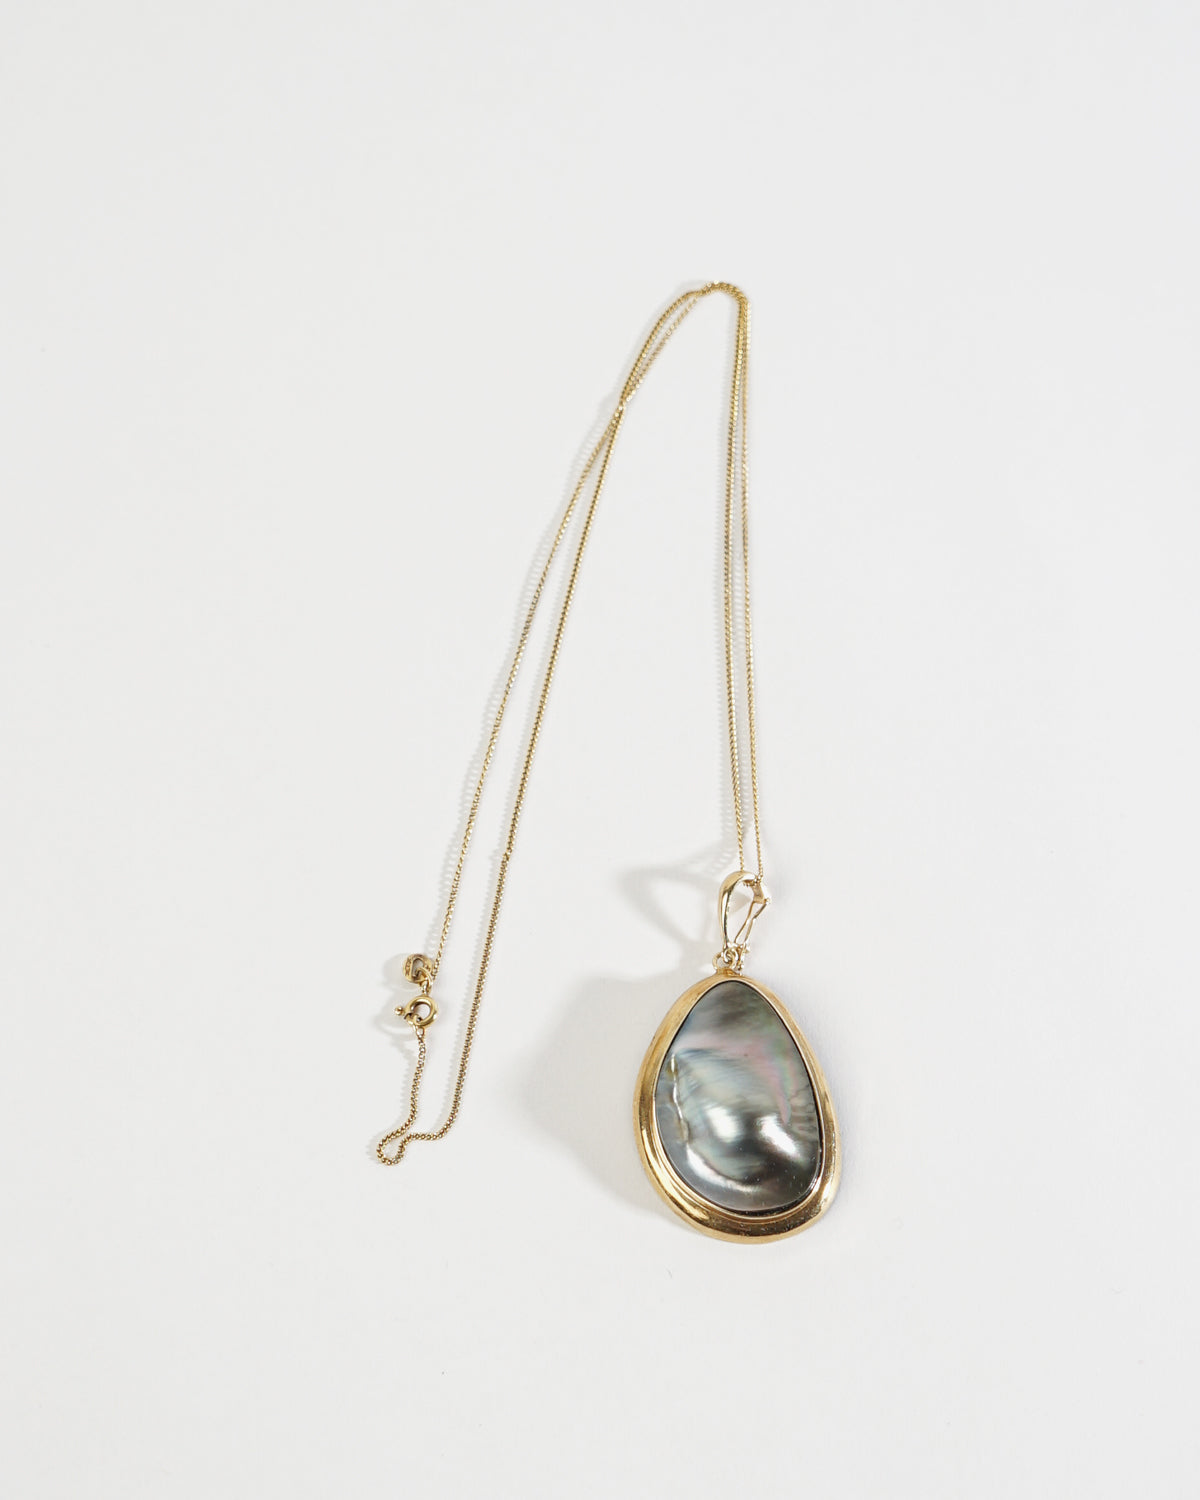 14k Necklace w/ Pearl Charm